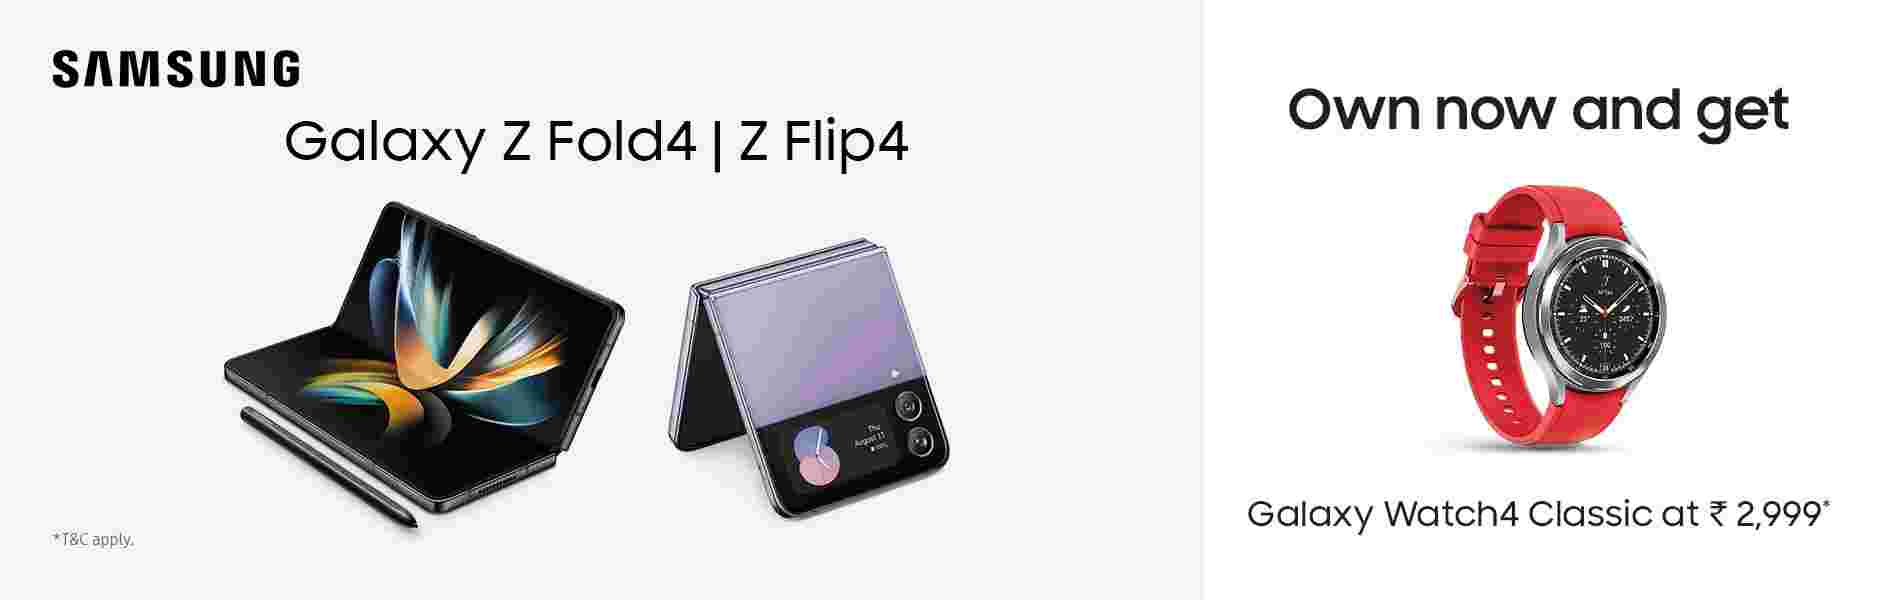 Samsung Galaxy Z Fold 4 and Flip 4 5G